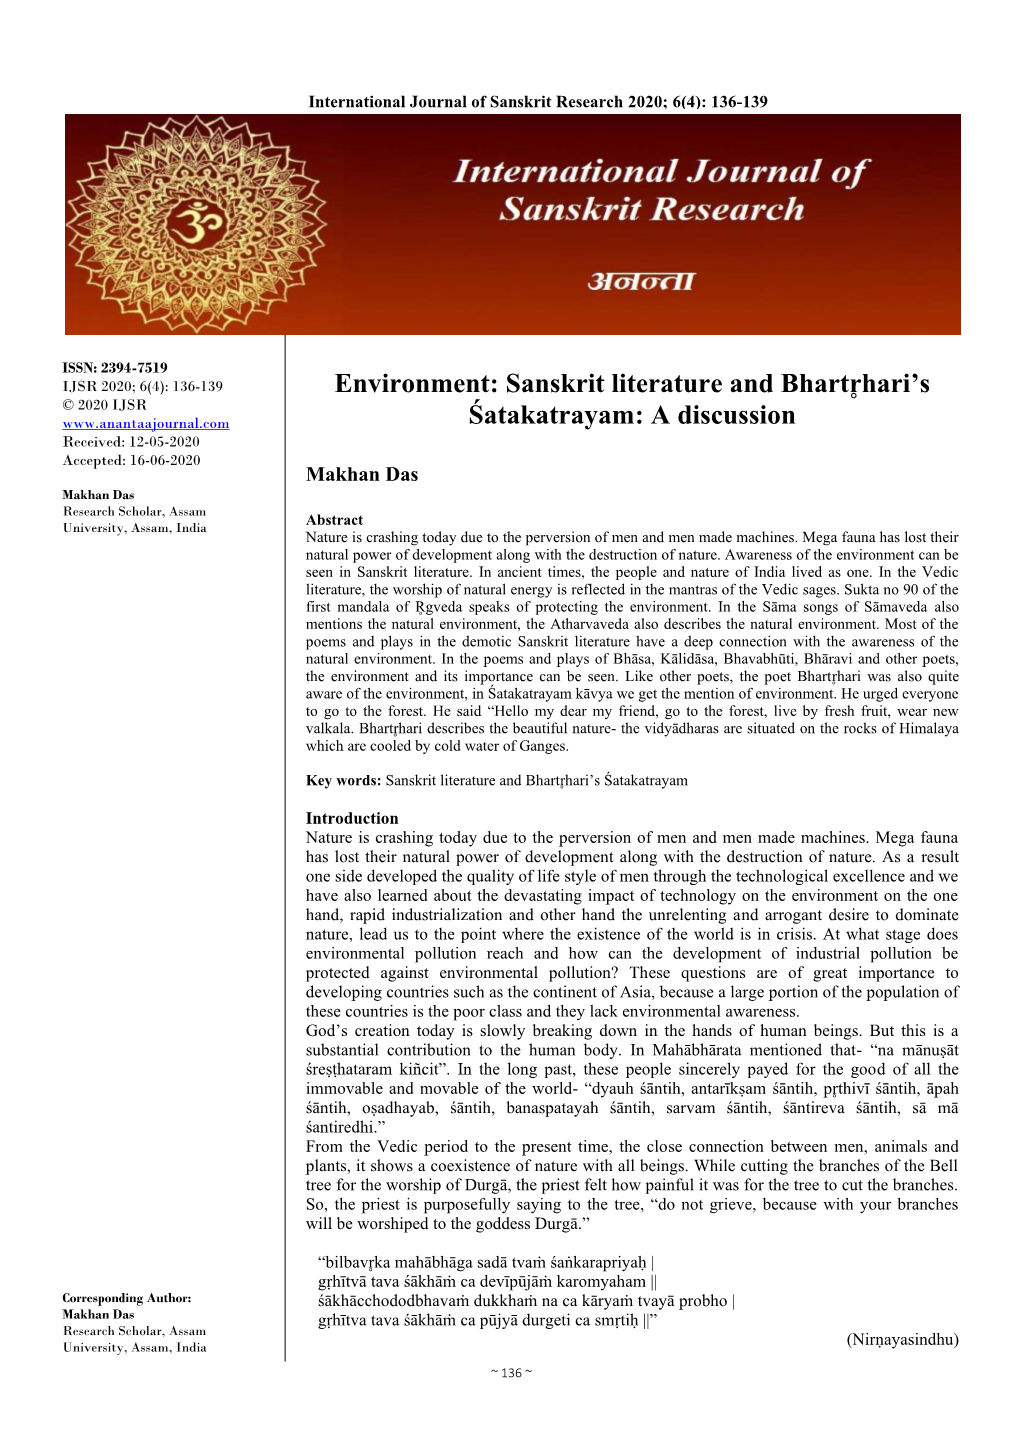 Environment: Sanskrit Literature and Bhartr̥hari's Śatakatrayam: A